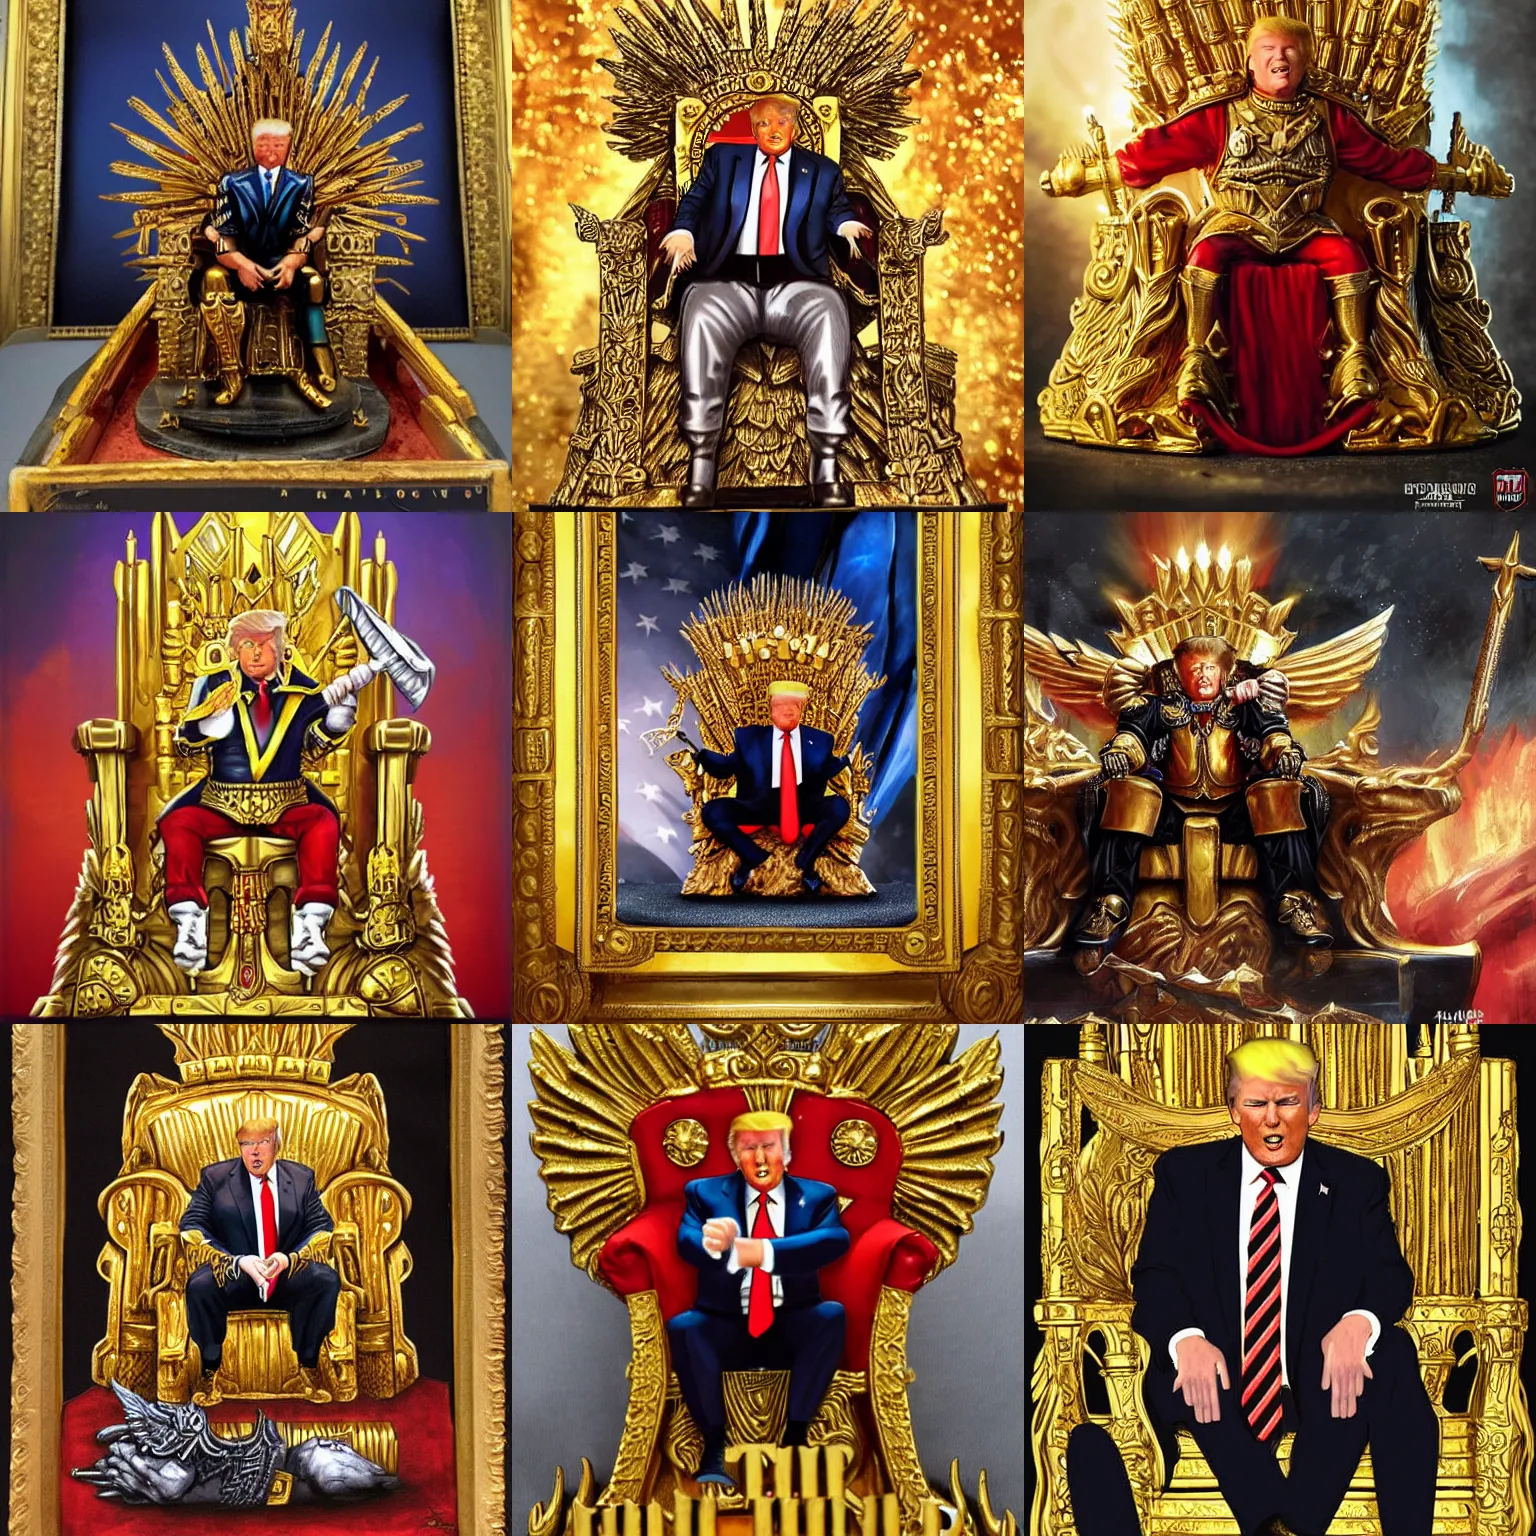 Prompt: Donald Trump sitting on the golden throne, warhammer art